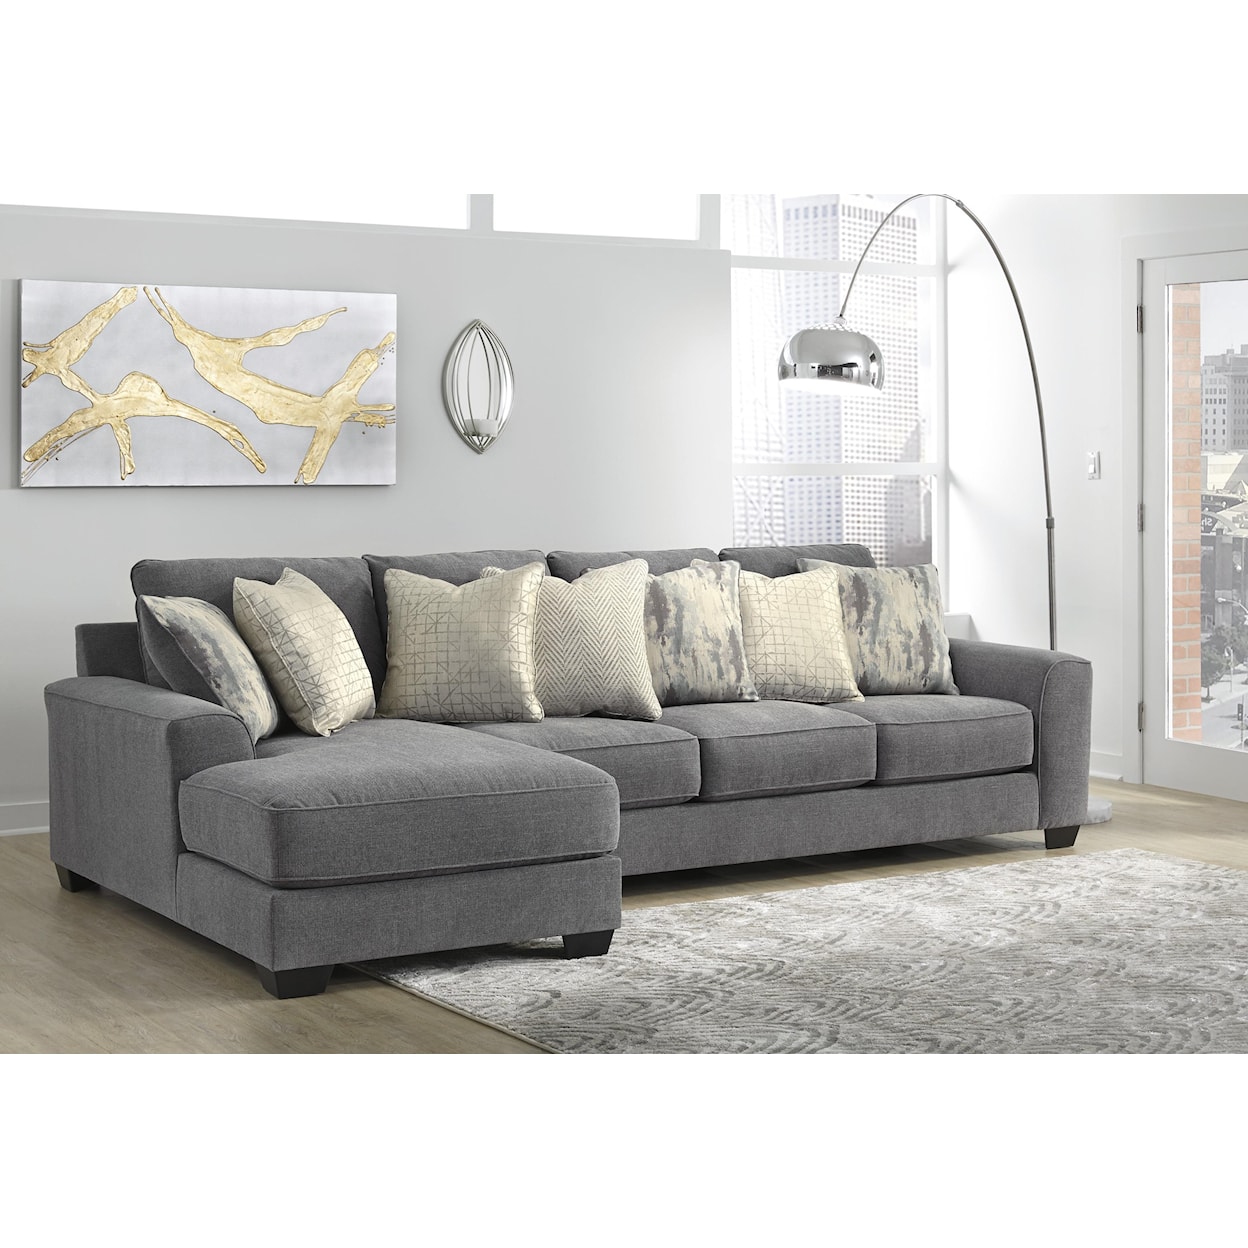 Ashley Furniture Castano 3 Piece Living Room Set